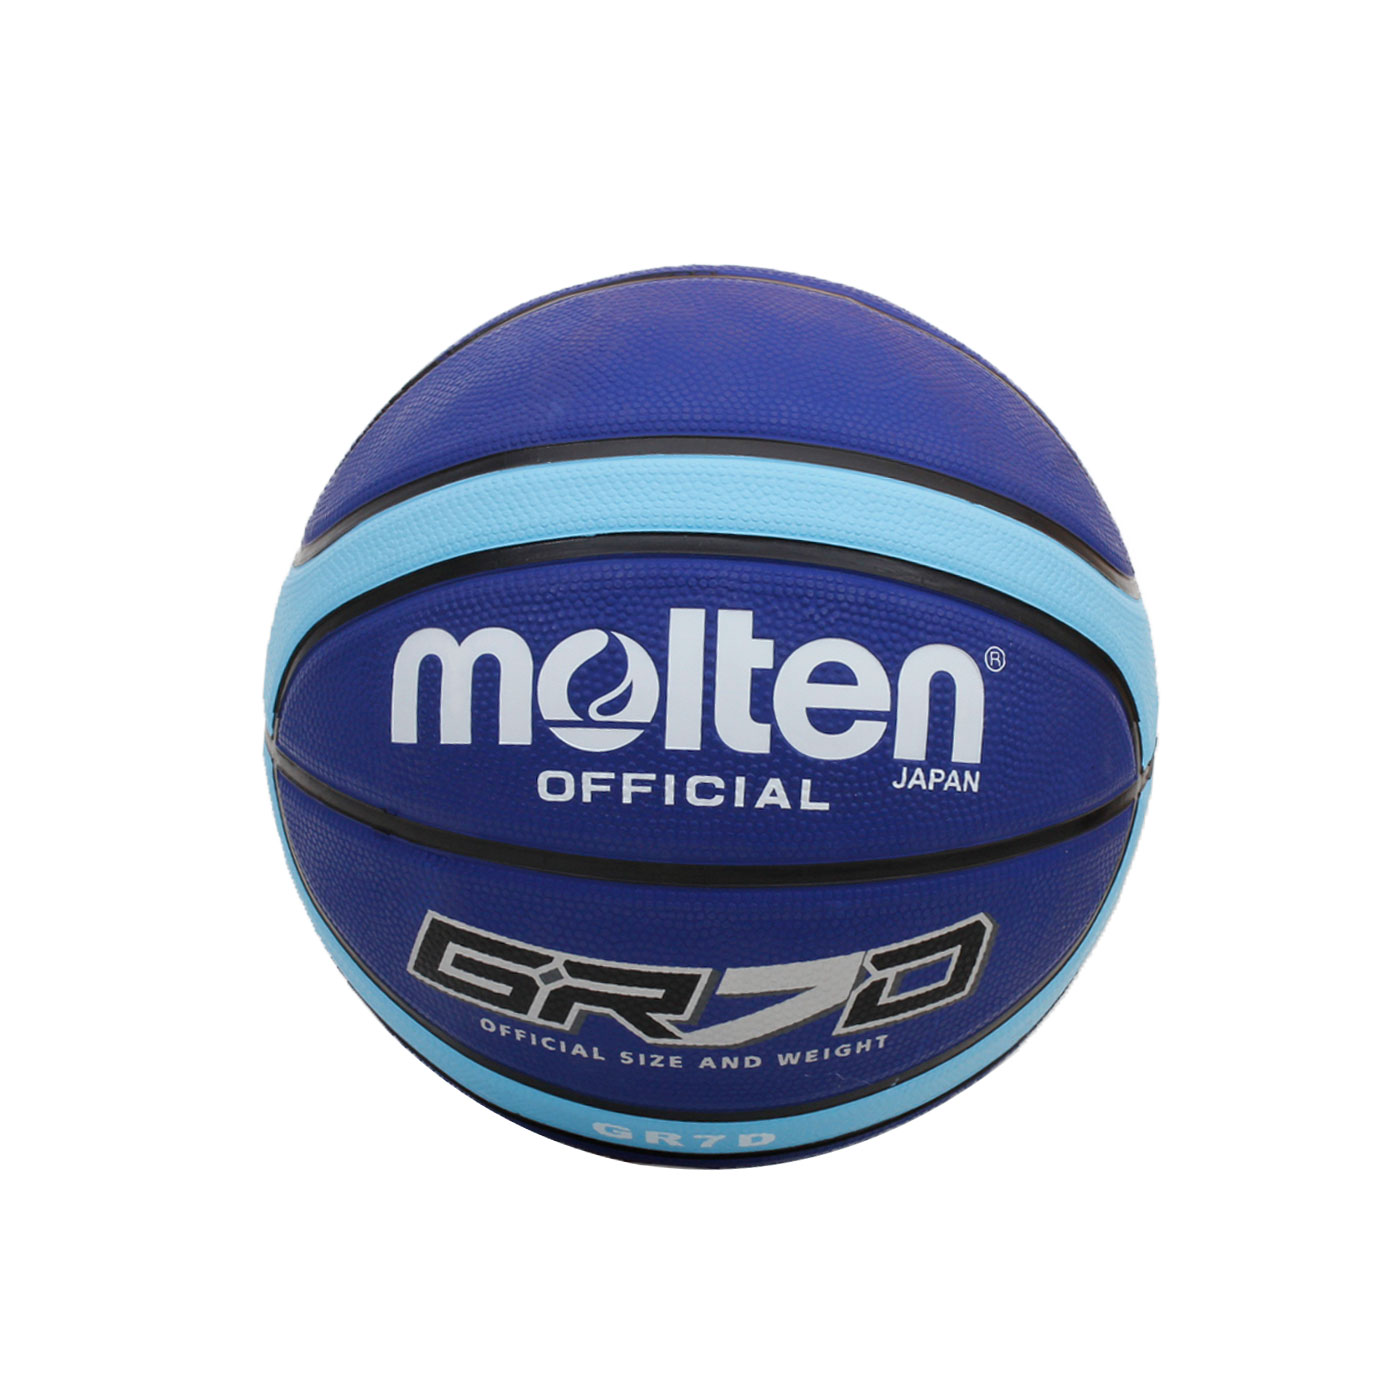 Molten 12片橡膠深溝籃球 BGR7D - 深藍水藍